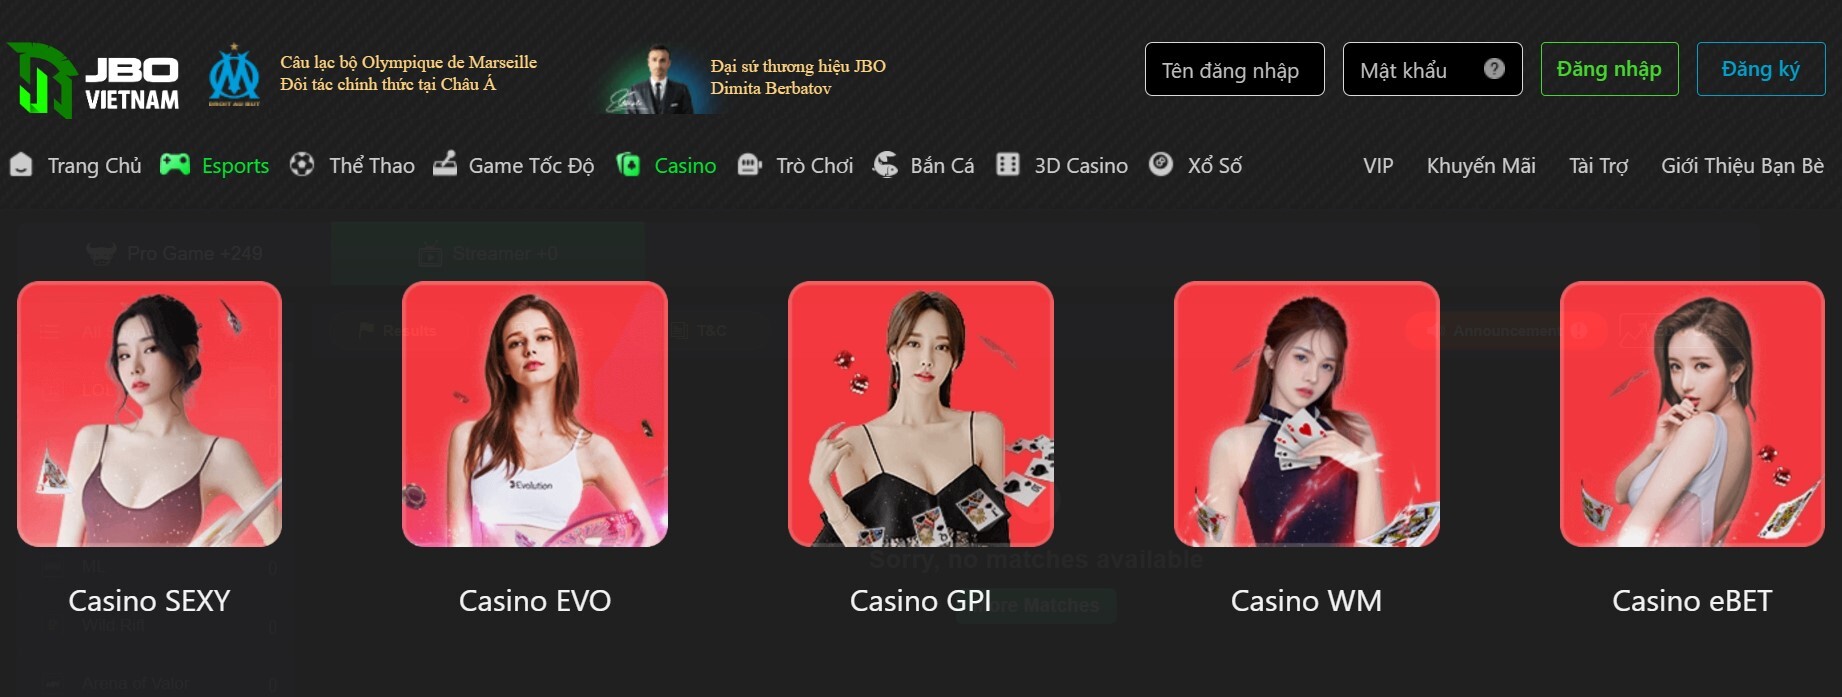 Live casino / Casino trực tuyến Jbo